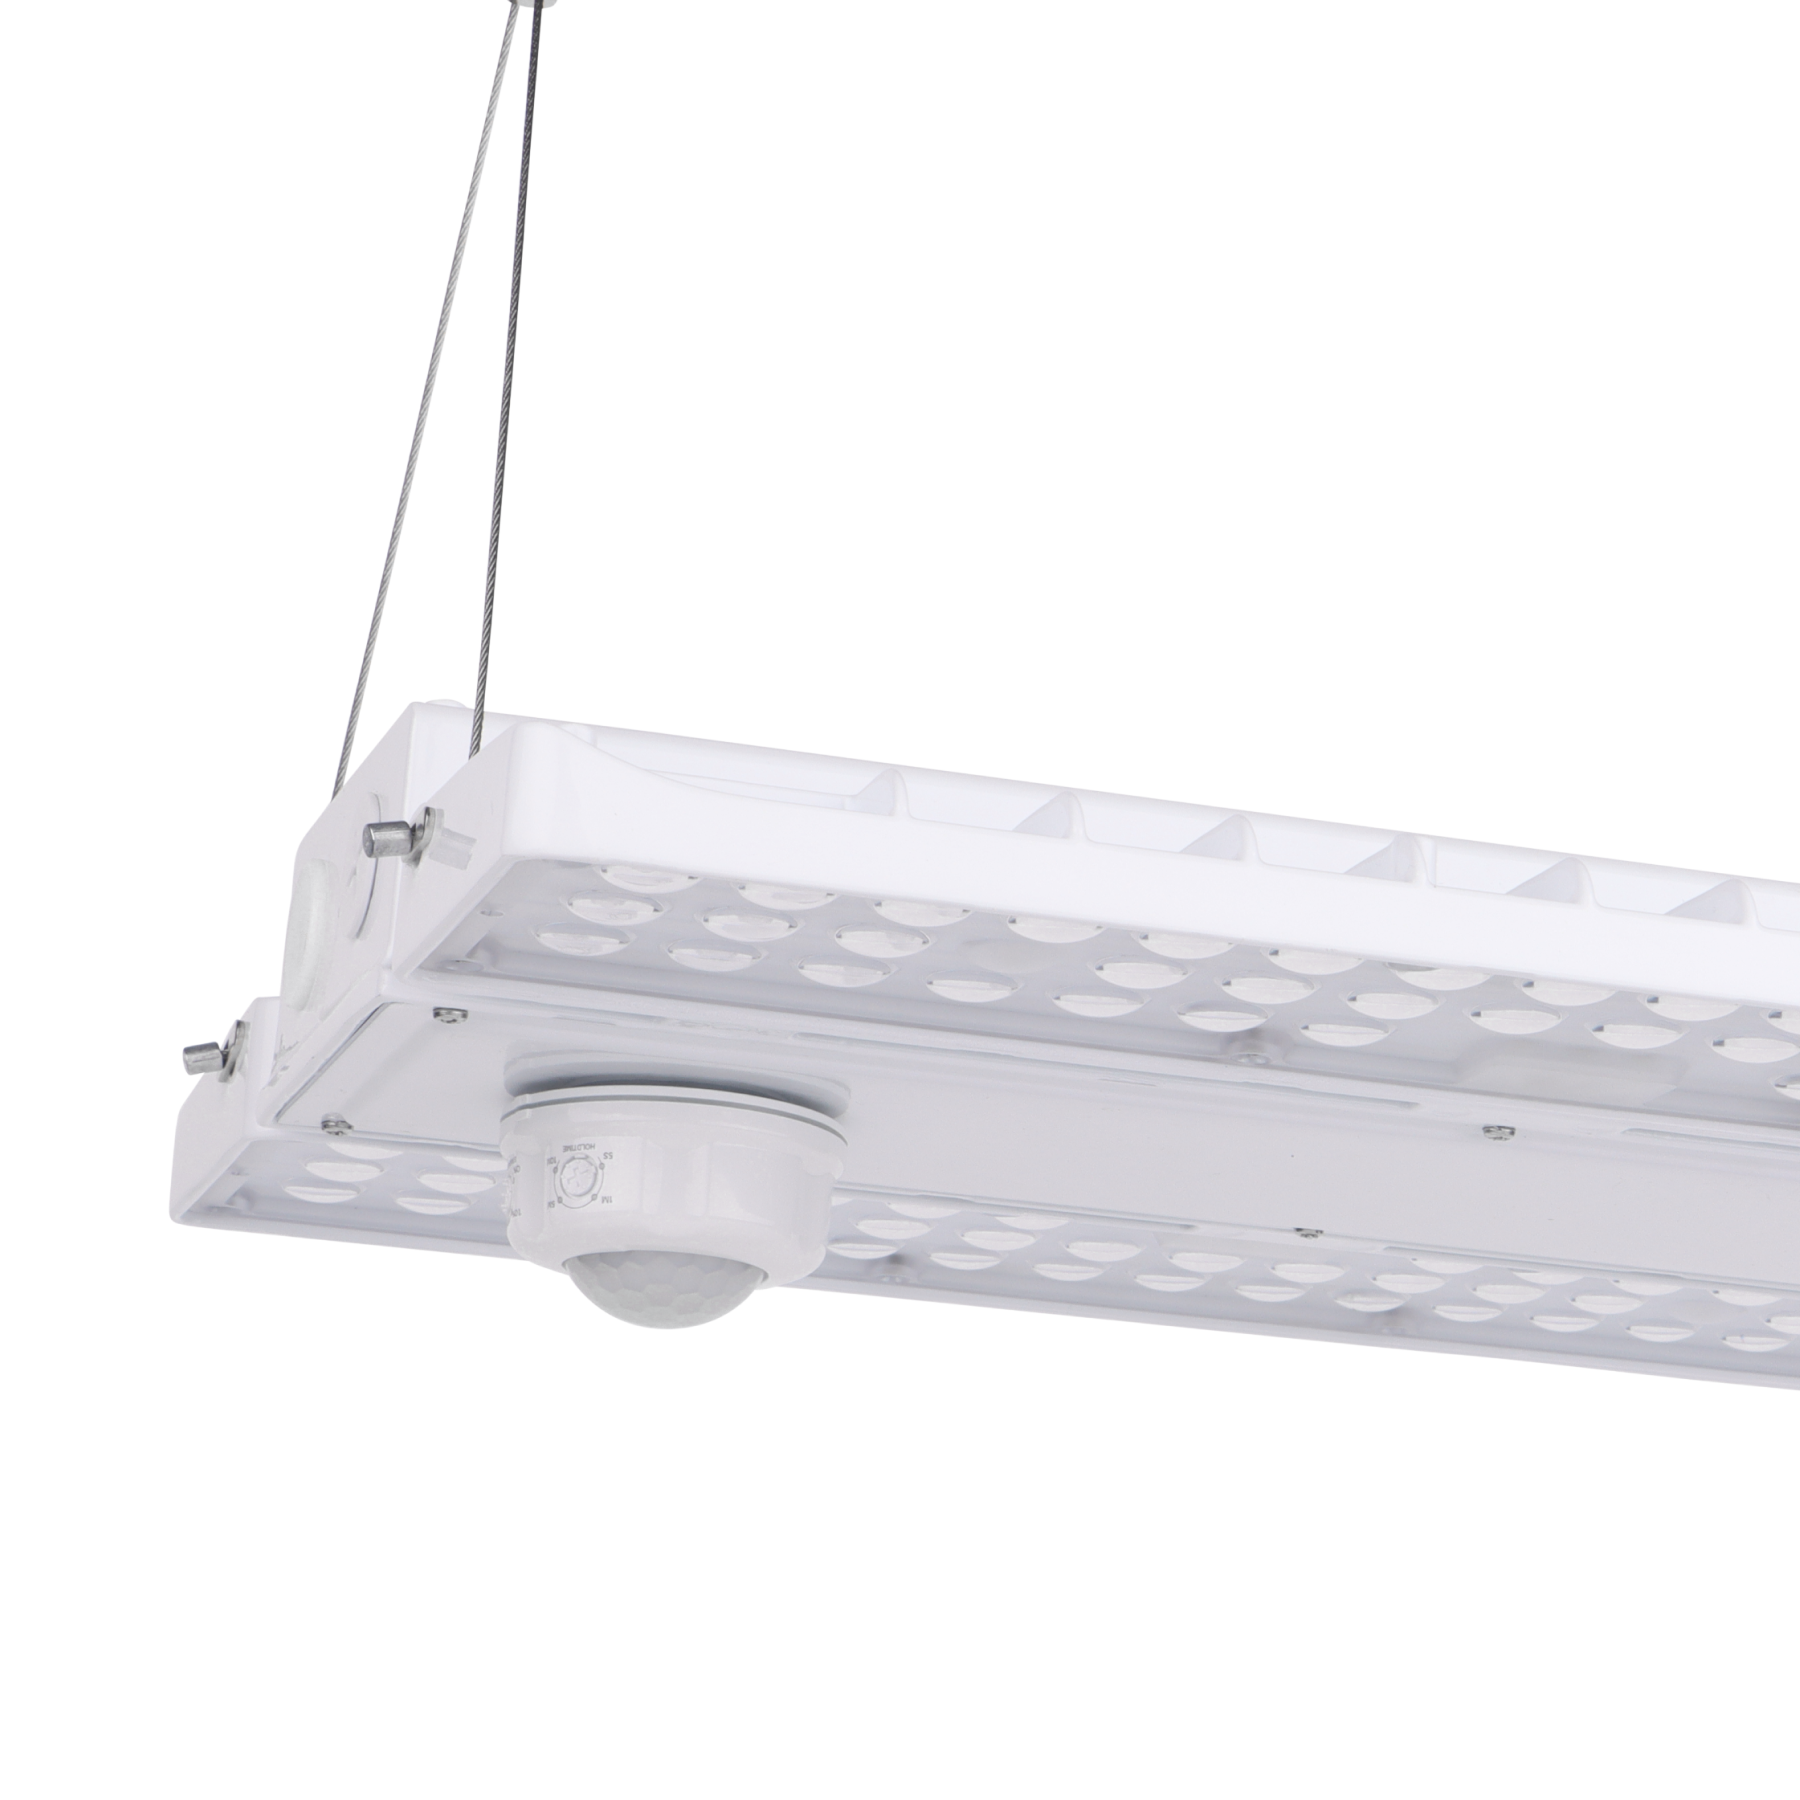 1.2FT LED Linear High Bay Light 90/105/130W Wattage Adjustable - 4000/5000K - 20150Lumens - 0-10V Dimmable With sensor base - 120-277VAC Input Voltage DLC 5.1 Premium, White